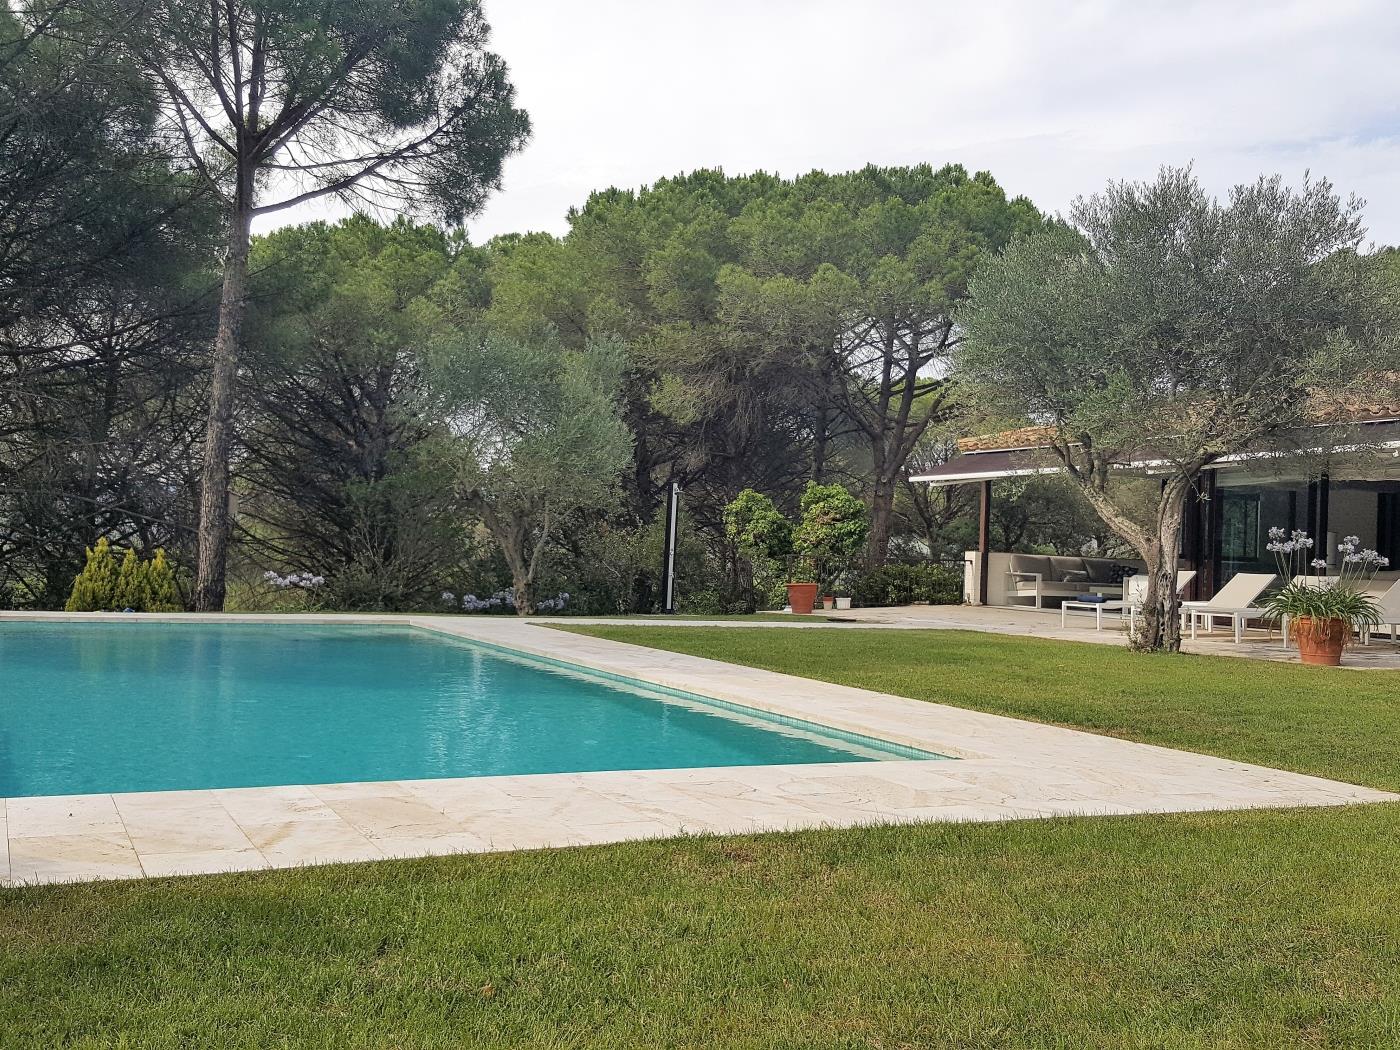 Casa Maravilla huis aan de Golf Costa Brava met privé infinity pool. .en Santa Cristina d'Aro